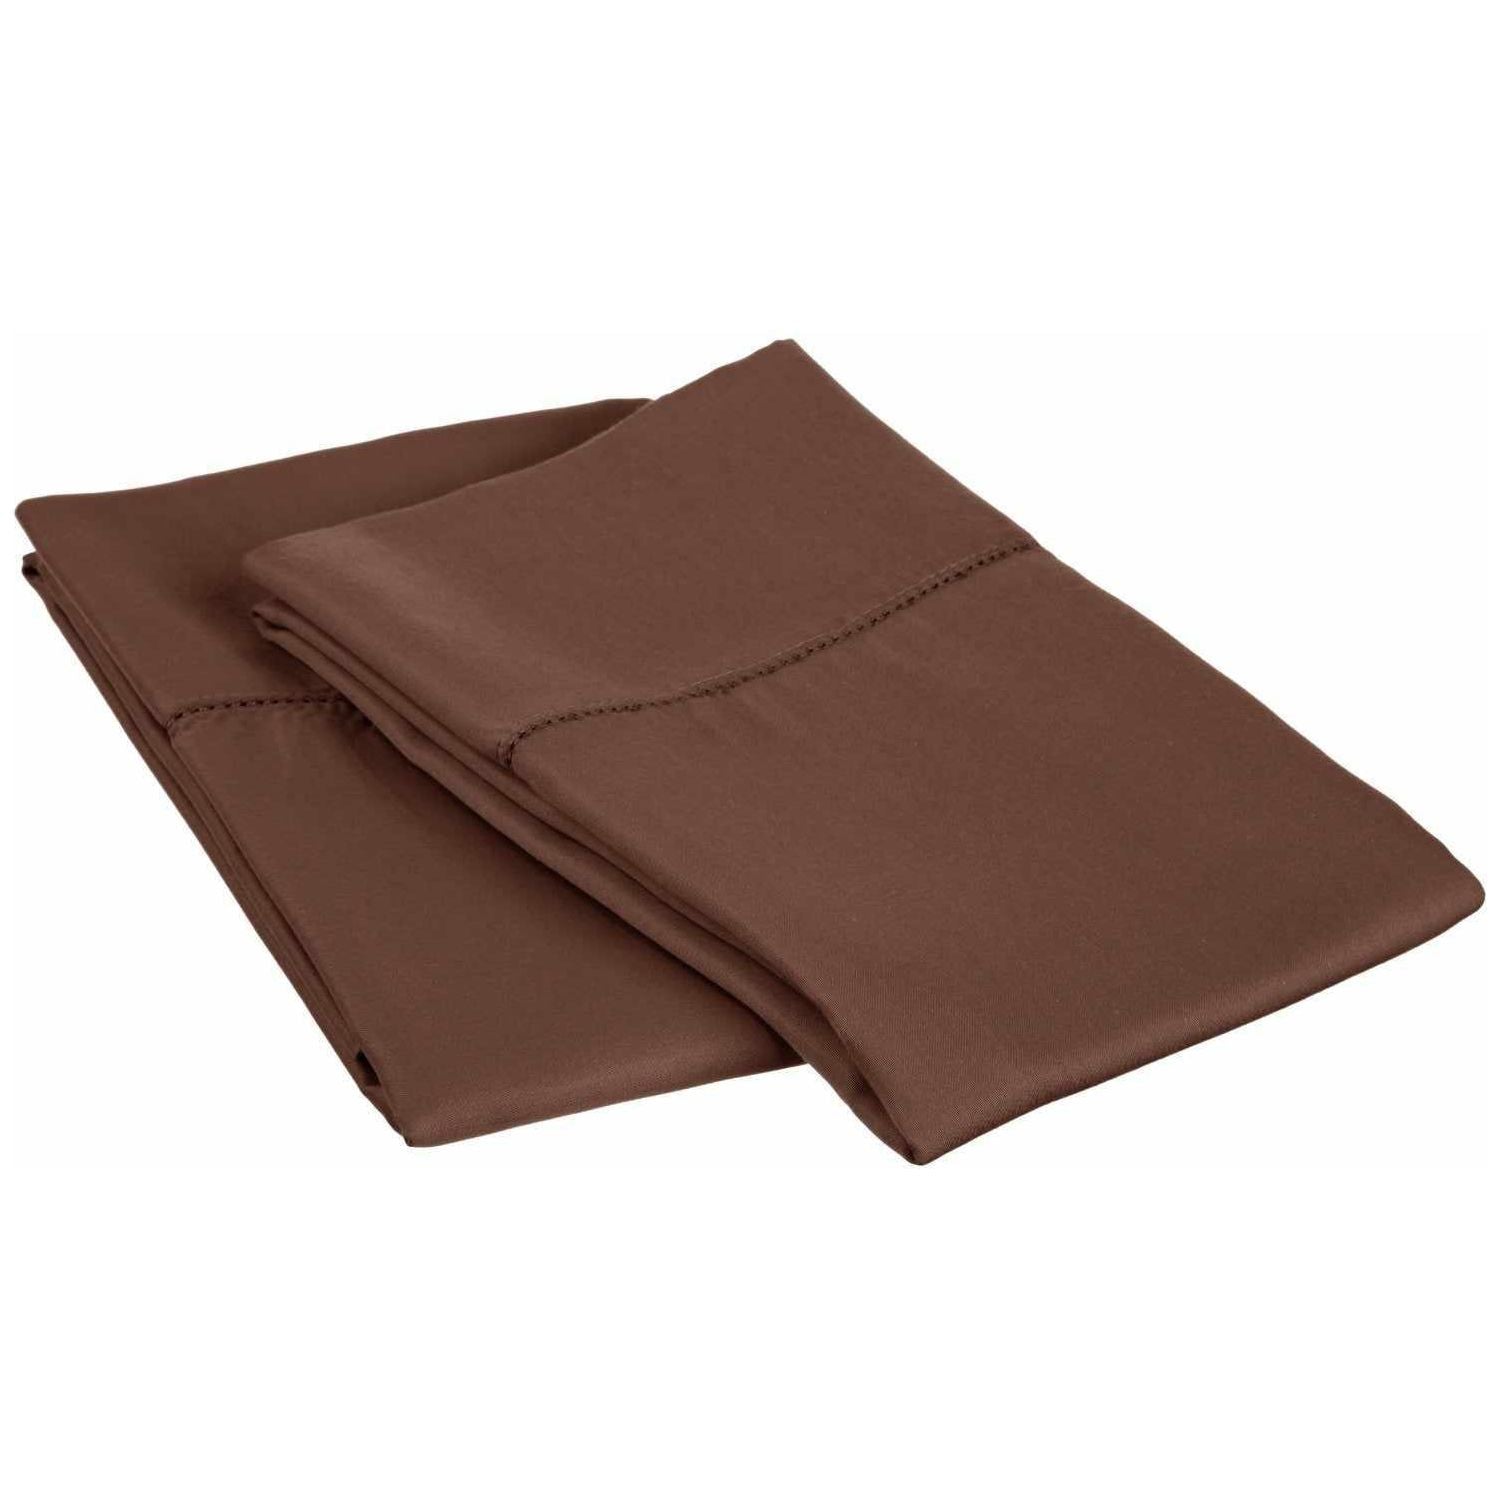 Hem Stitched Cotton Blend 2-Piece Pillowcase Set - Chocolate